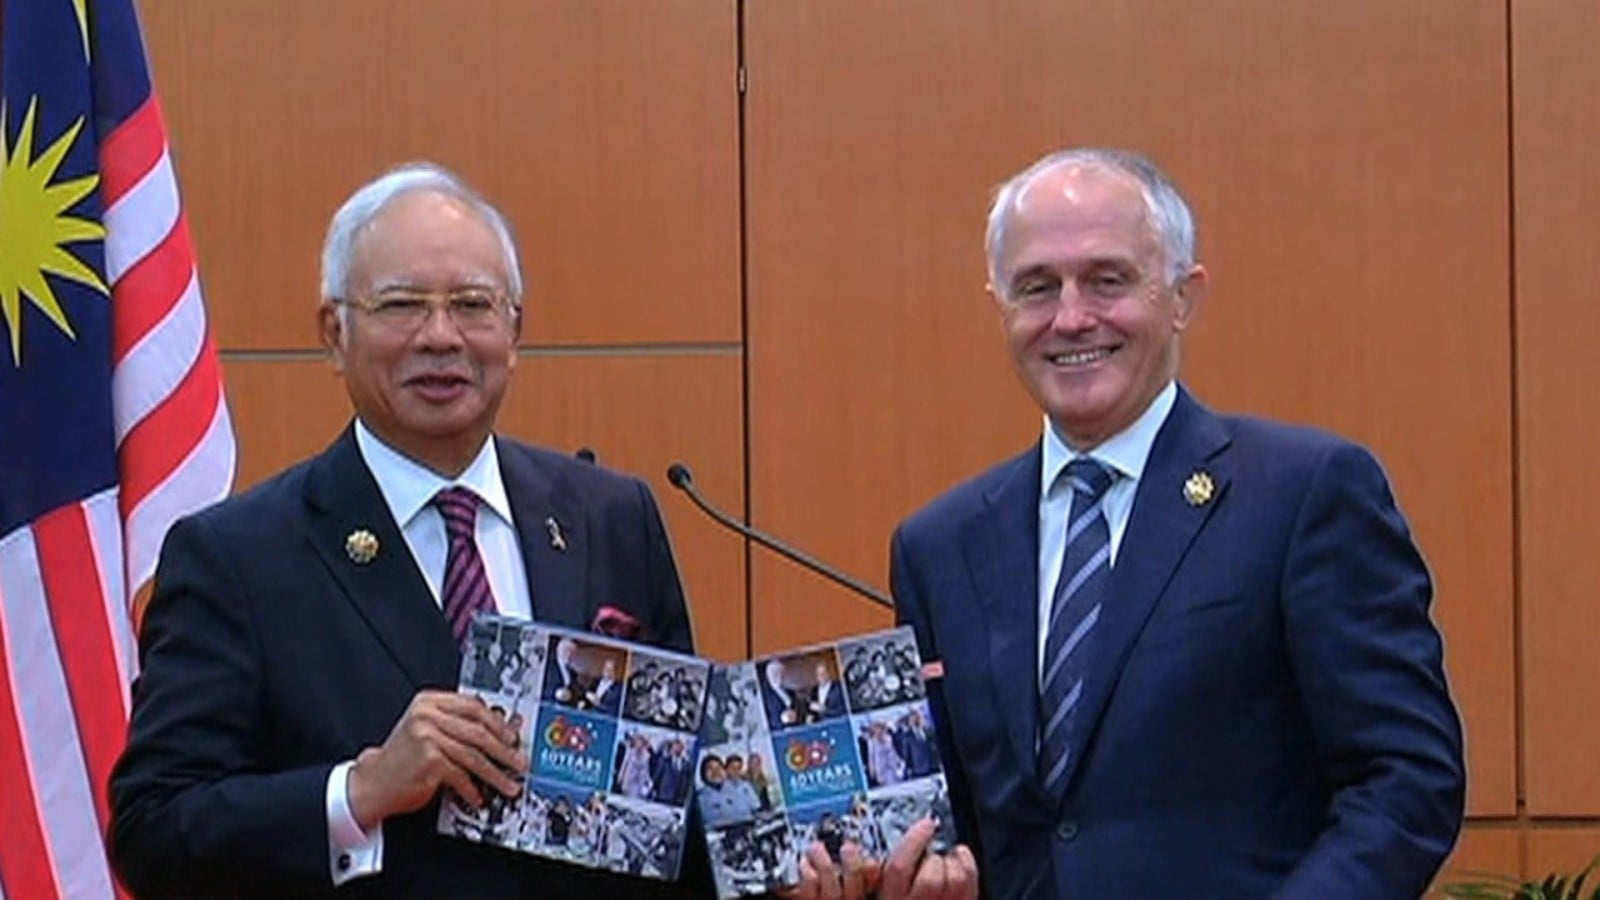 Prime Minister of Malaysia with PM Australia